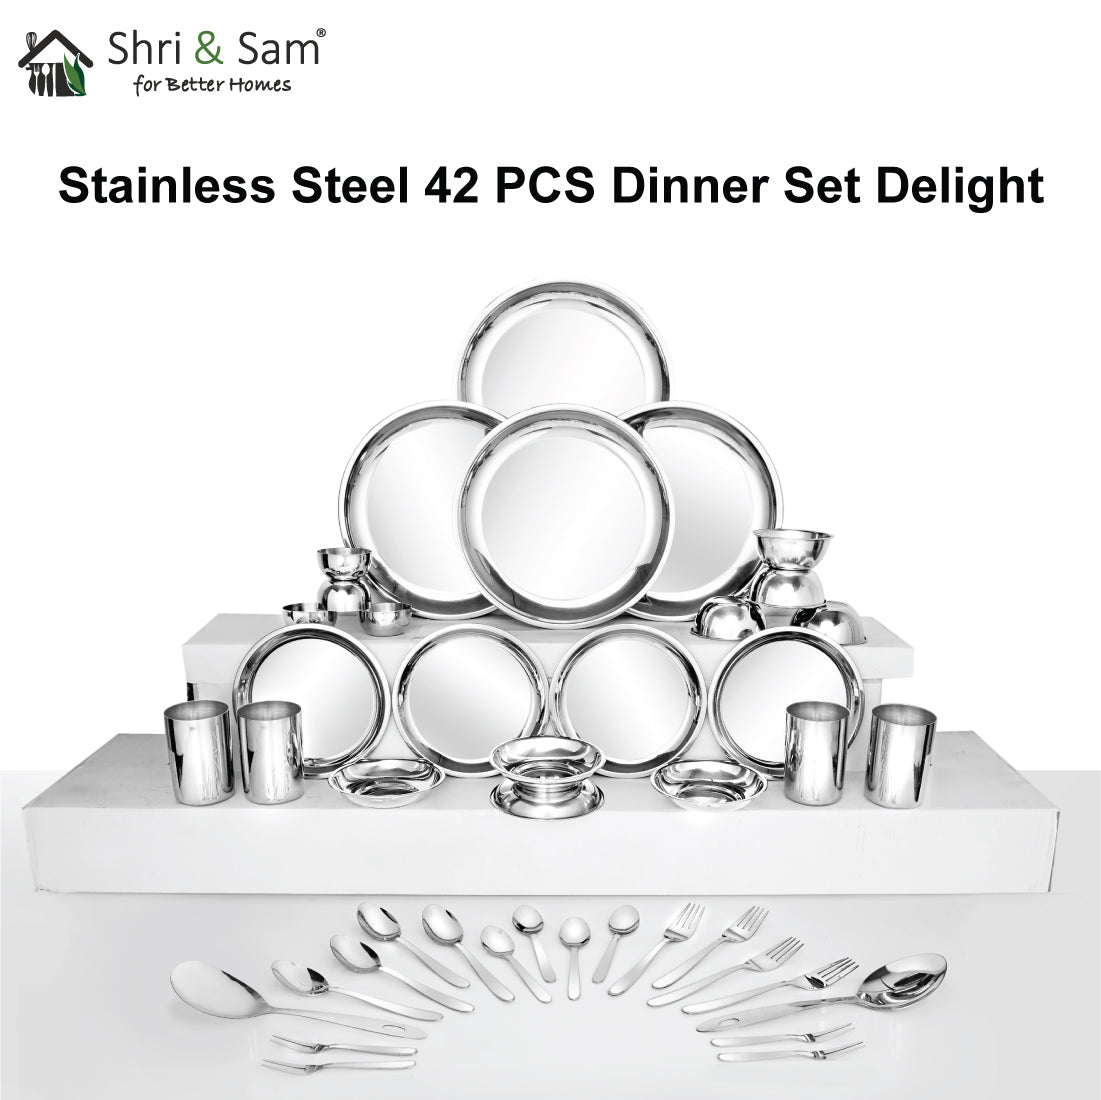 Stainless Steel 42 PCS Dinner set (4 People) Delight